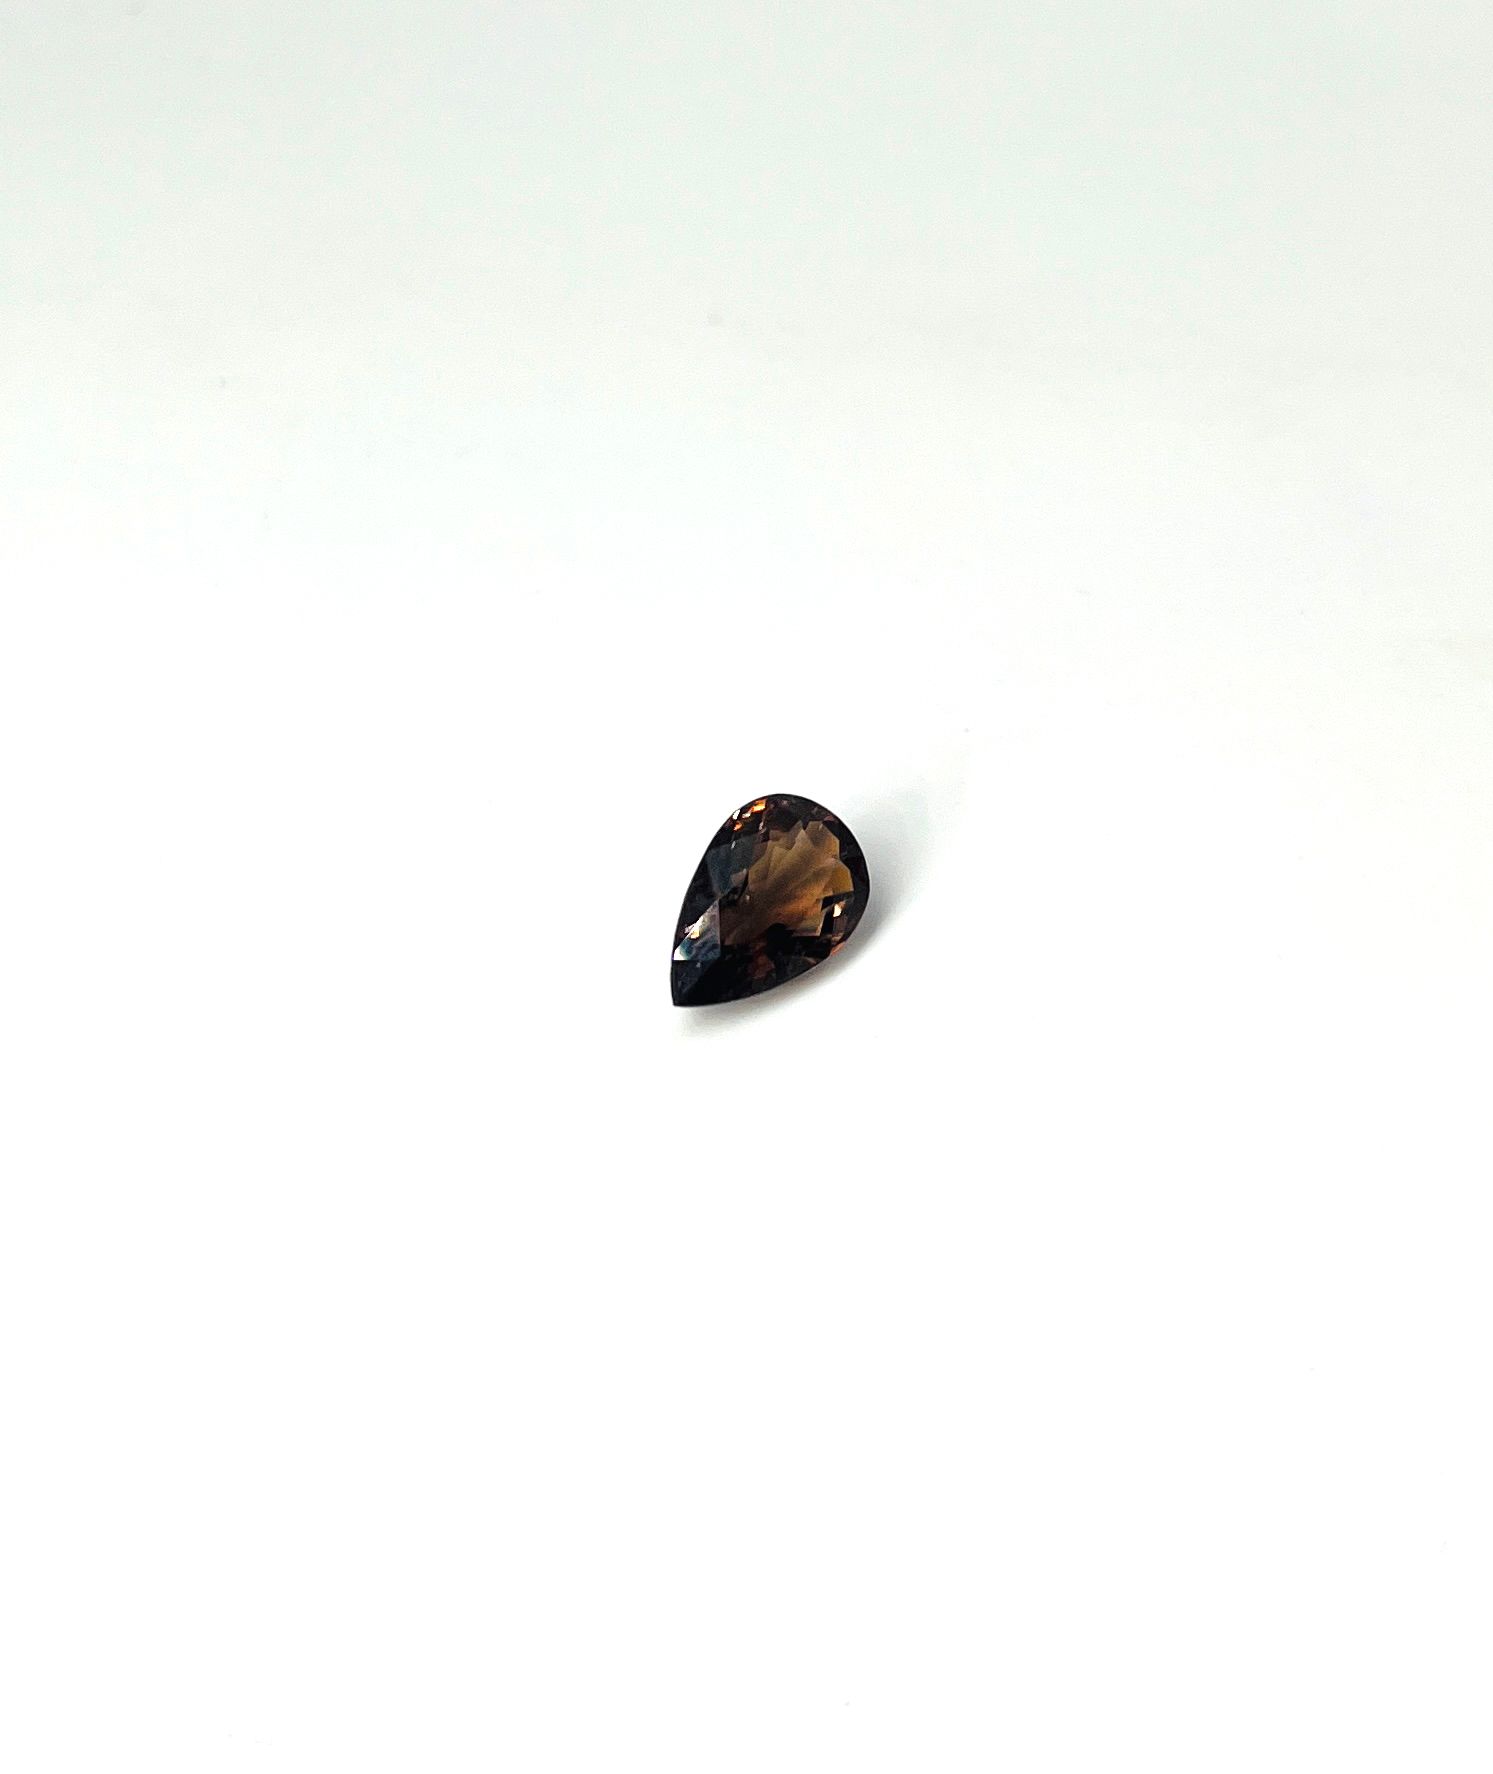 Null Tourmaline taille poire pesant 3,23 cts  Dimensions : 0.8 x 1.2 cm